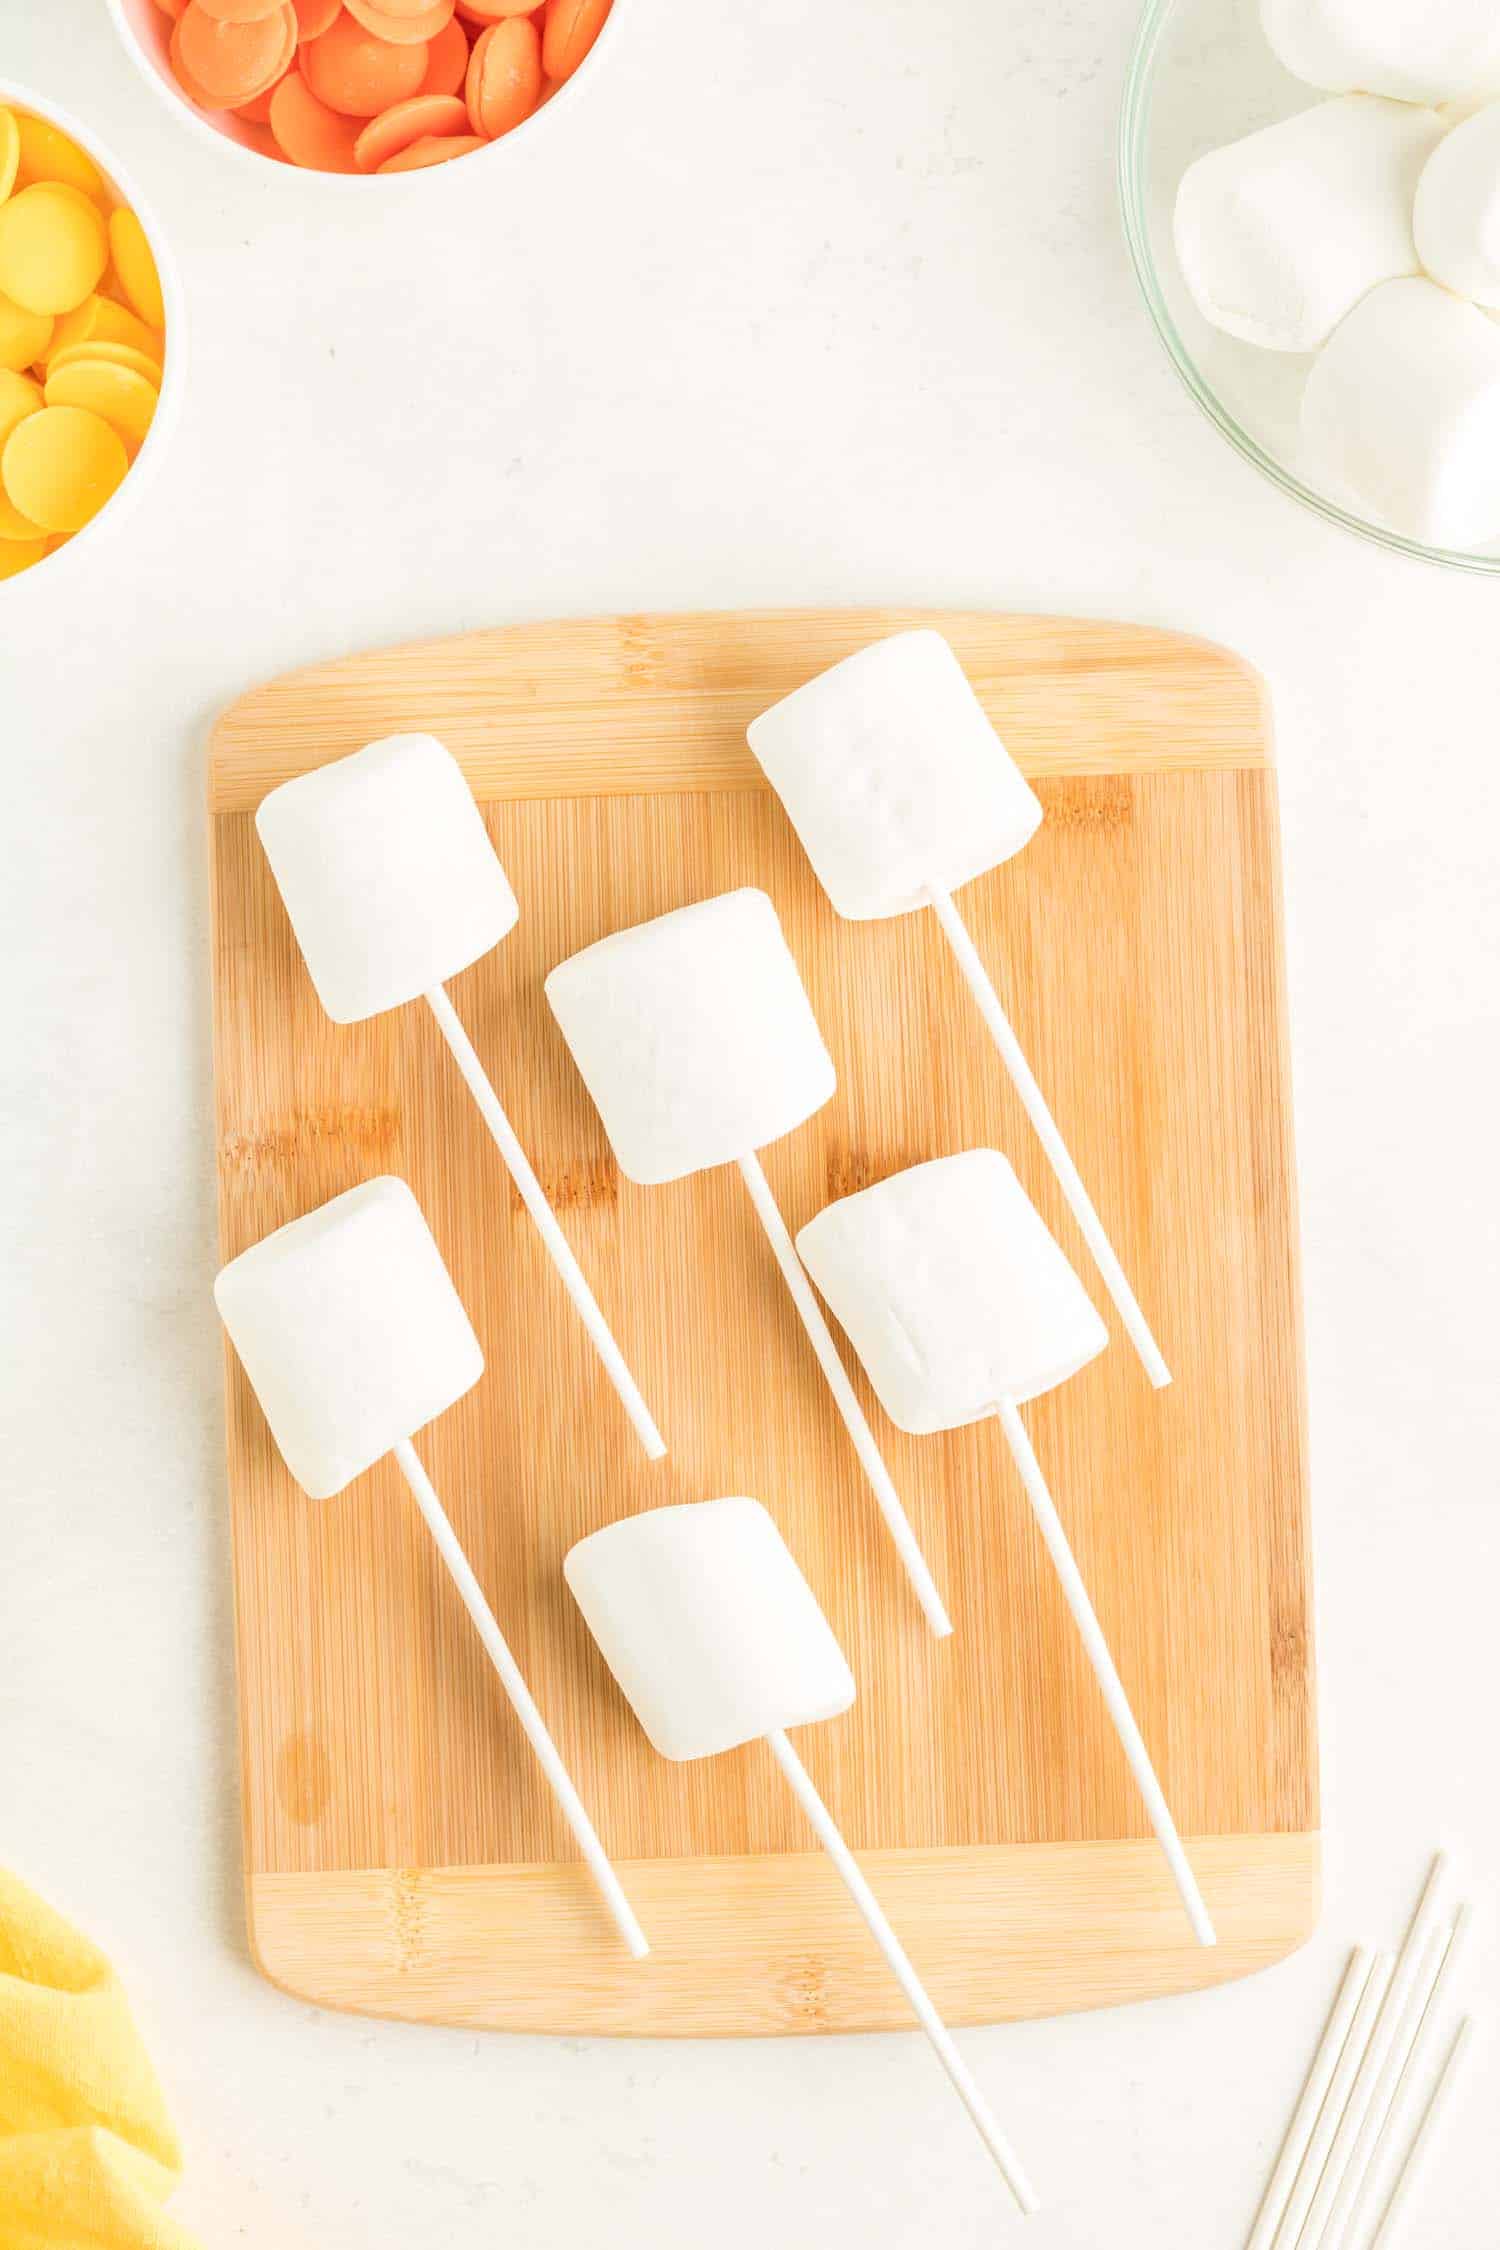 Six marshmallow pops on wooden cutting board.